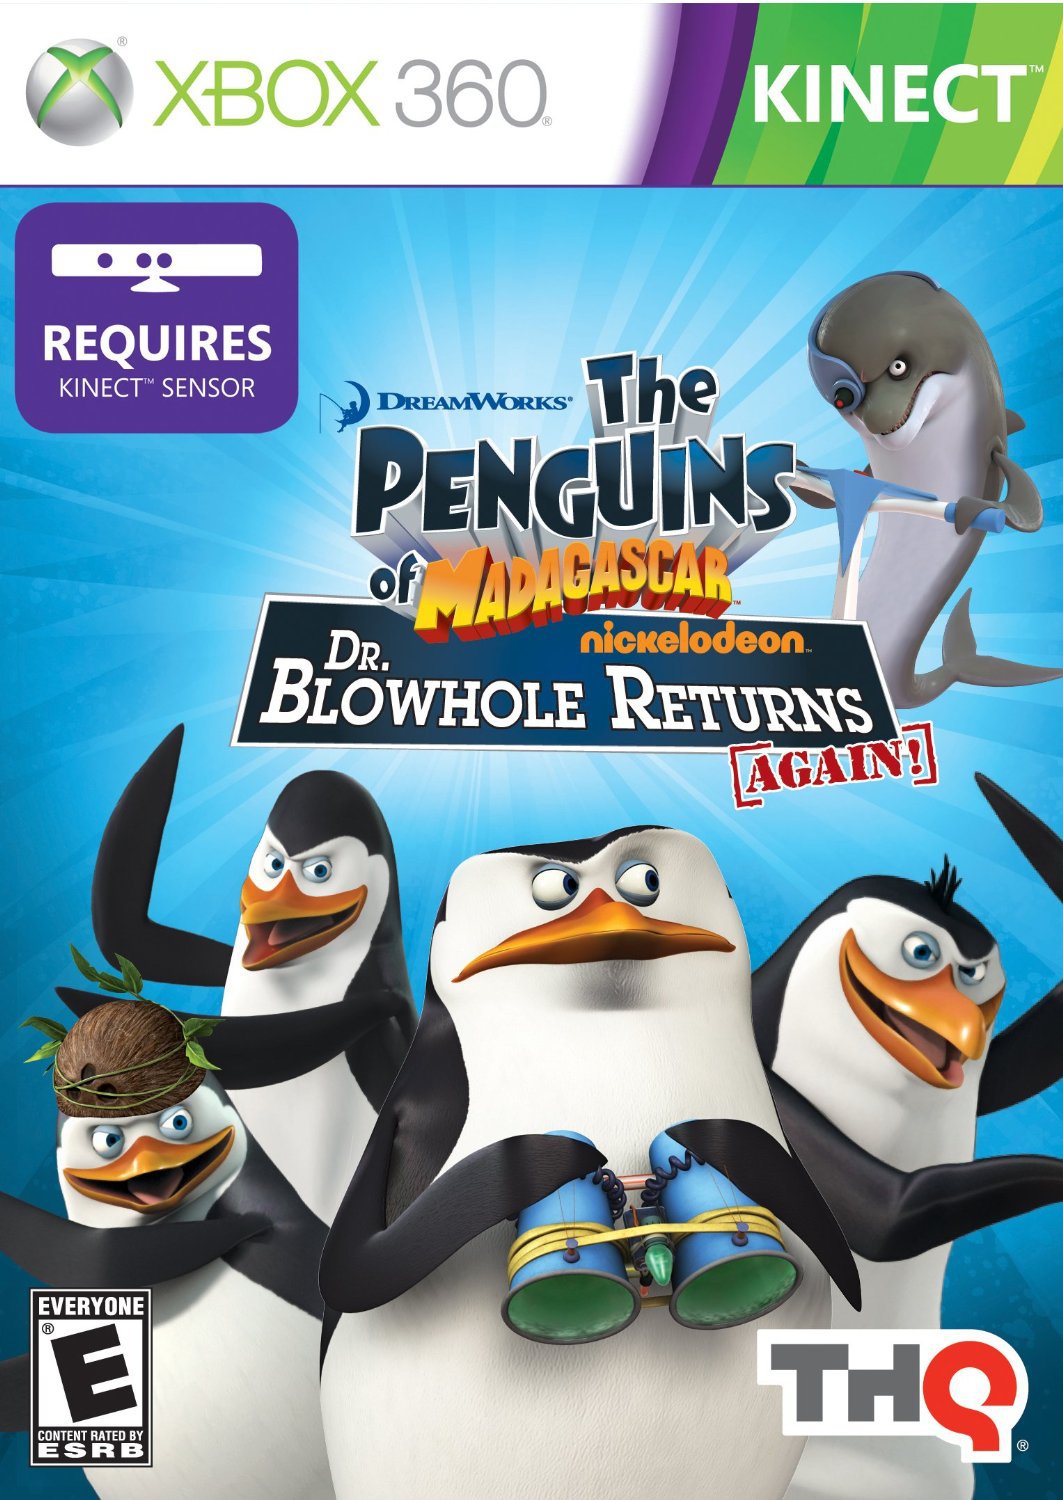 Penguins of Madagascar, The